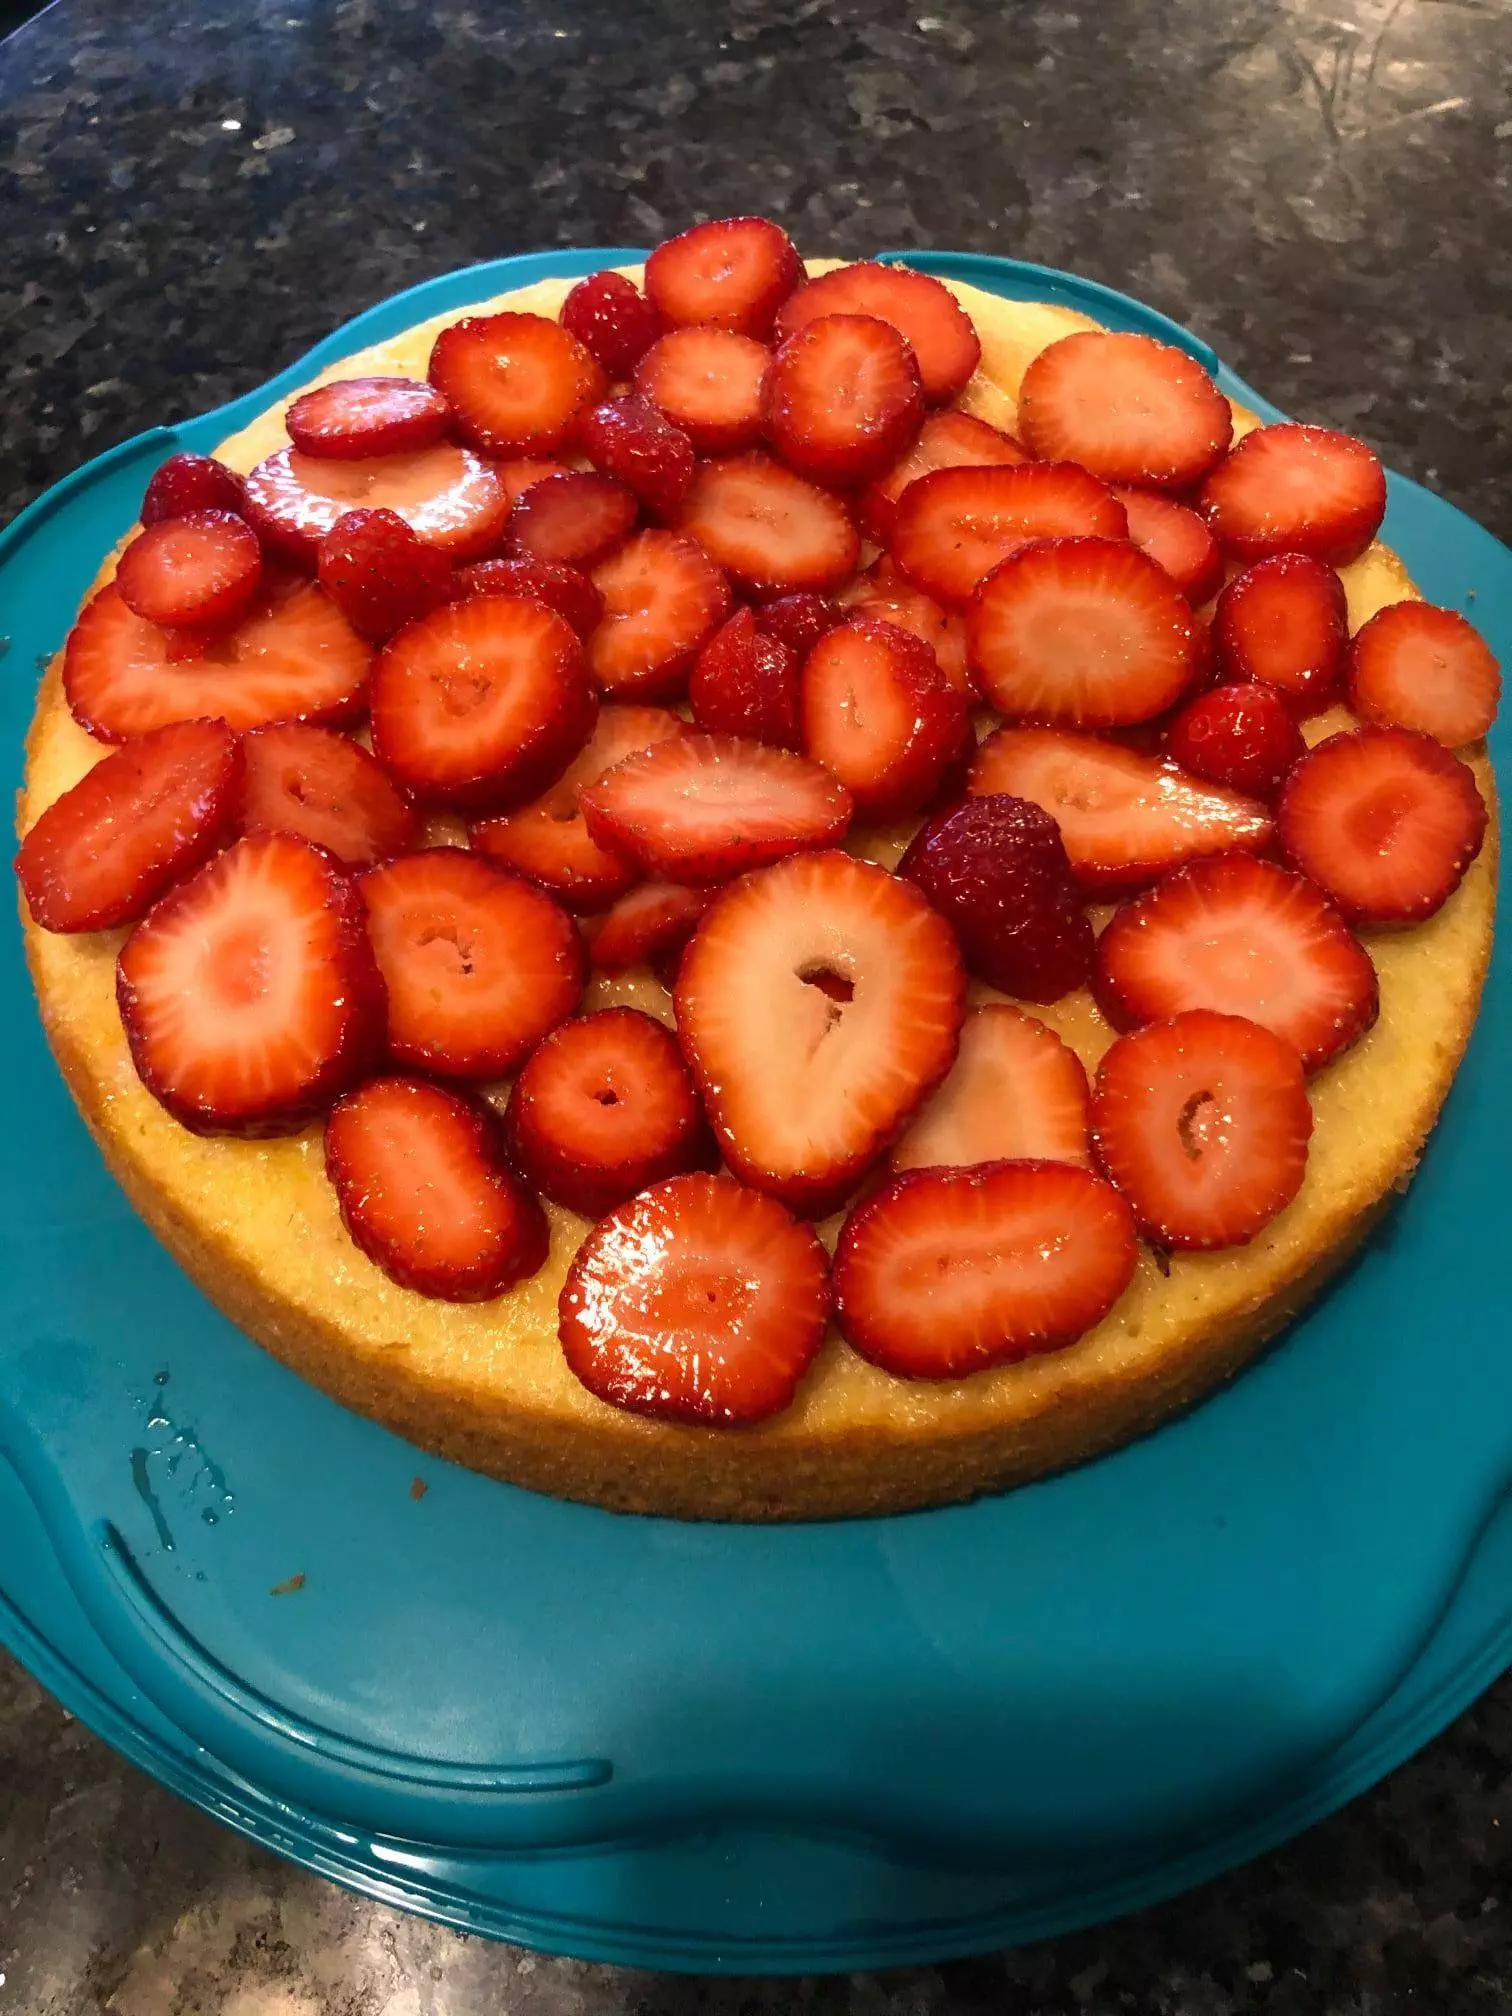 lemon cake with strawberries